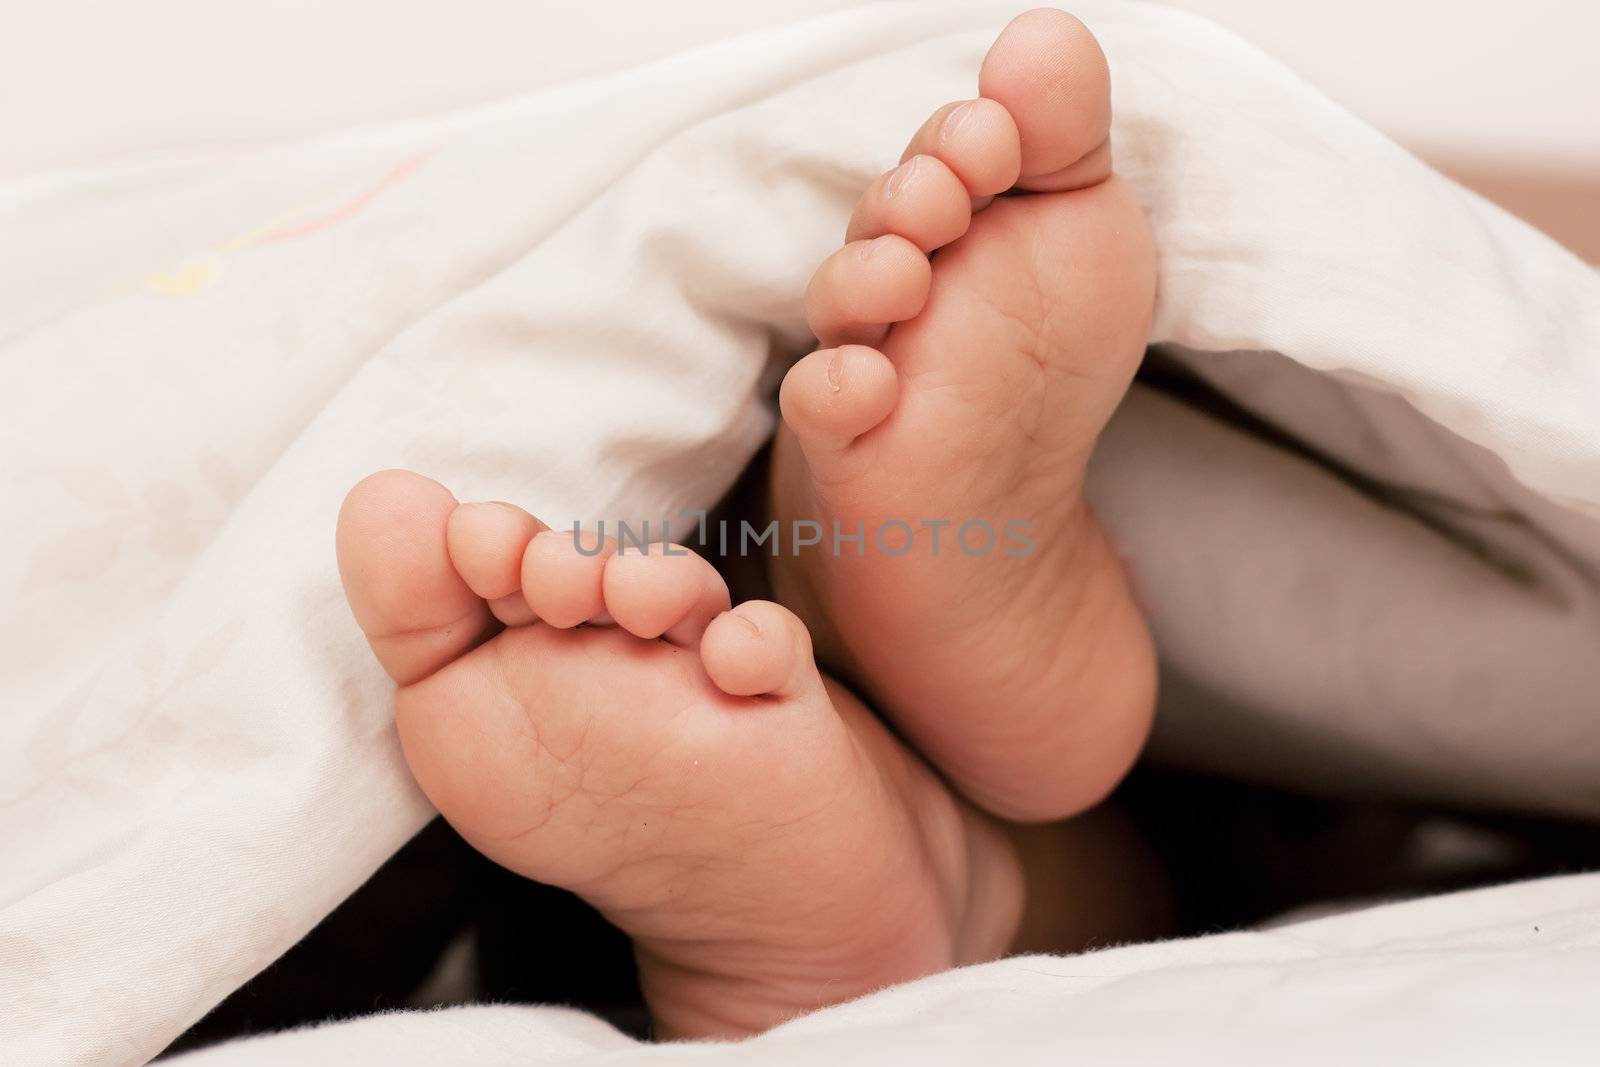 Baby feet under a blanket by AGorohov